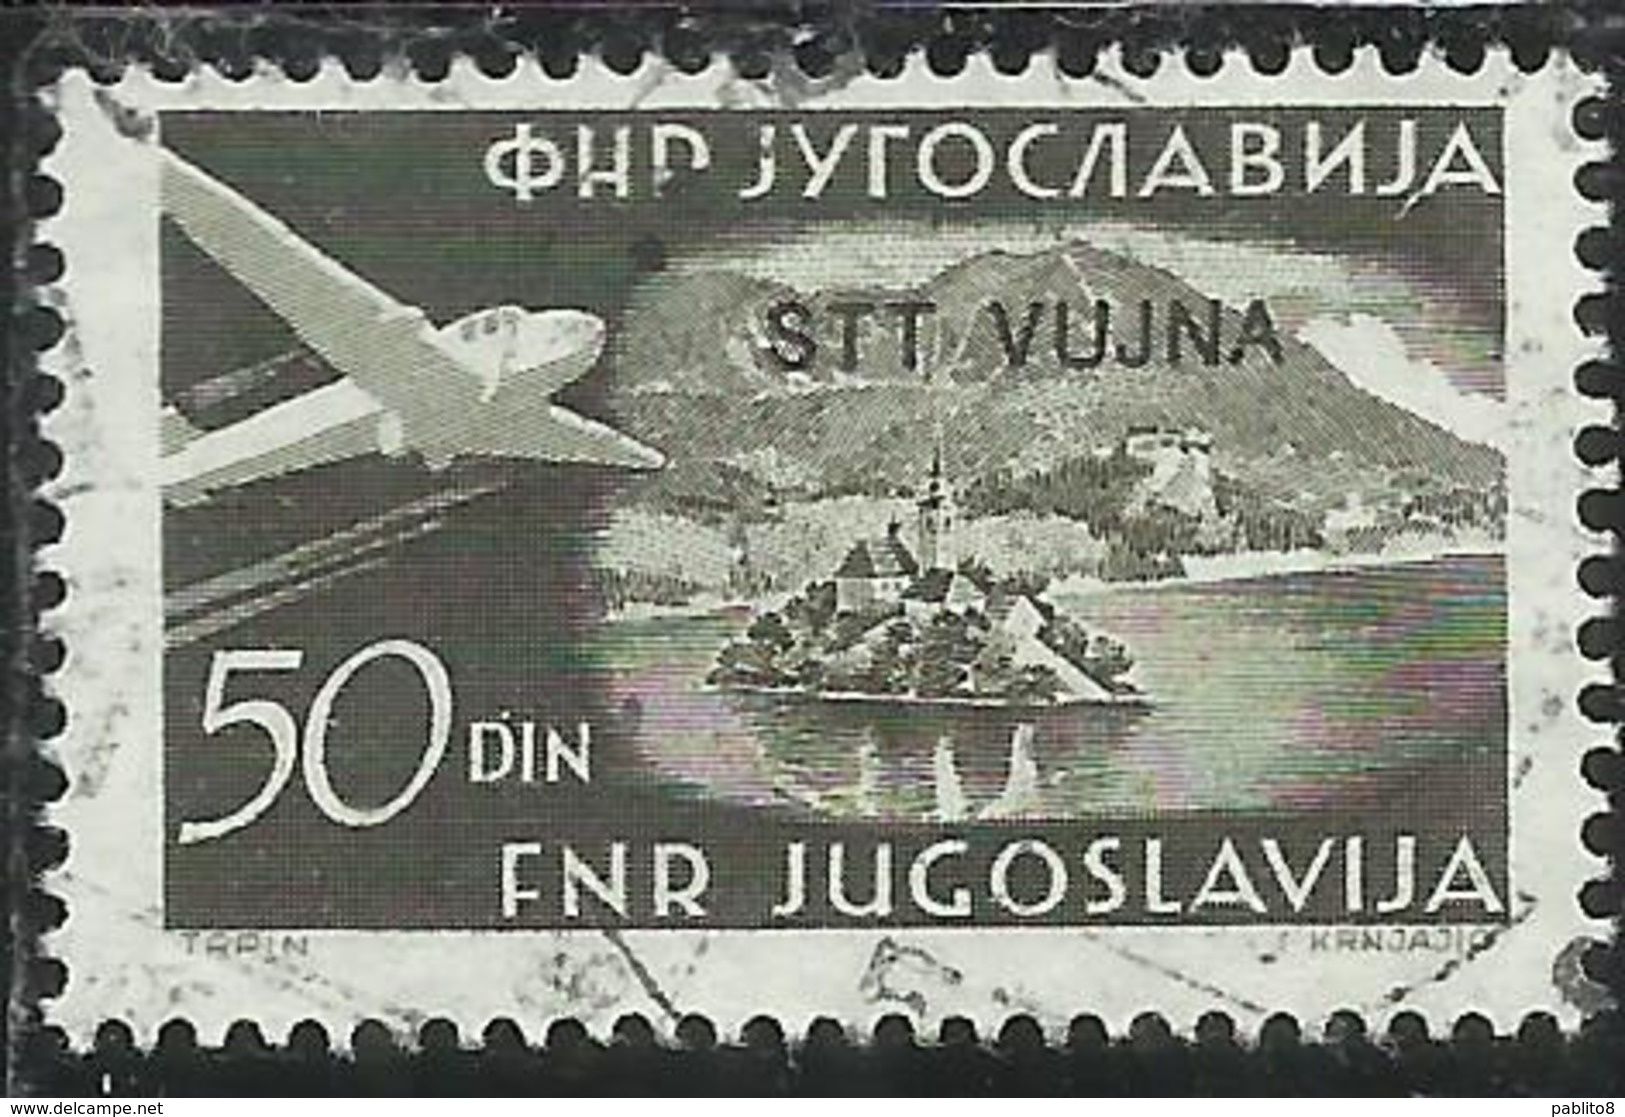 TRIESTE B 1954 POSTA AEREA AIR MAIL ESPERANTO CONGRESS YUGOSLAVIA SOPRASTAMPATO JUGOSLAVIA 50d USATO USED OBLITERE' - Luftpost